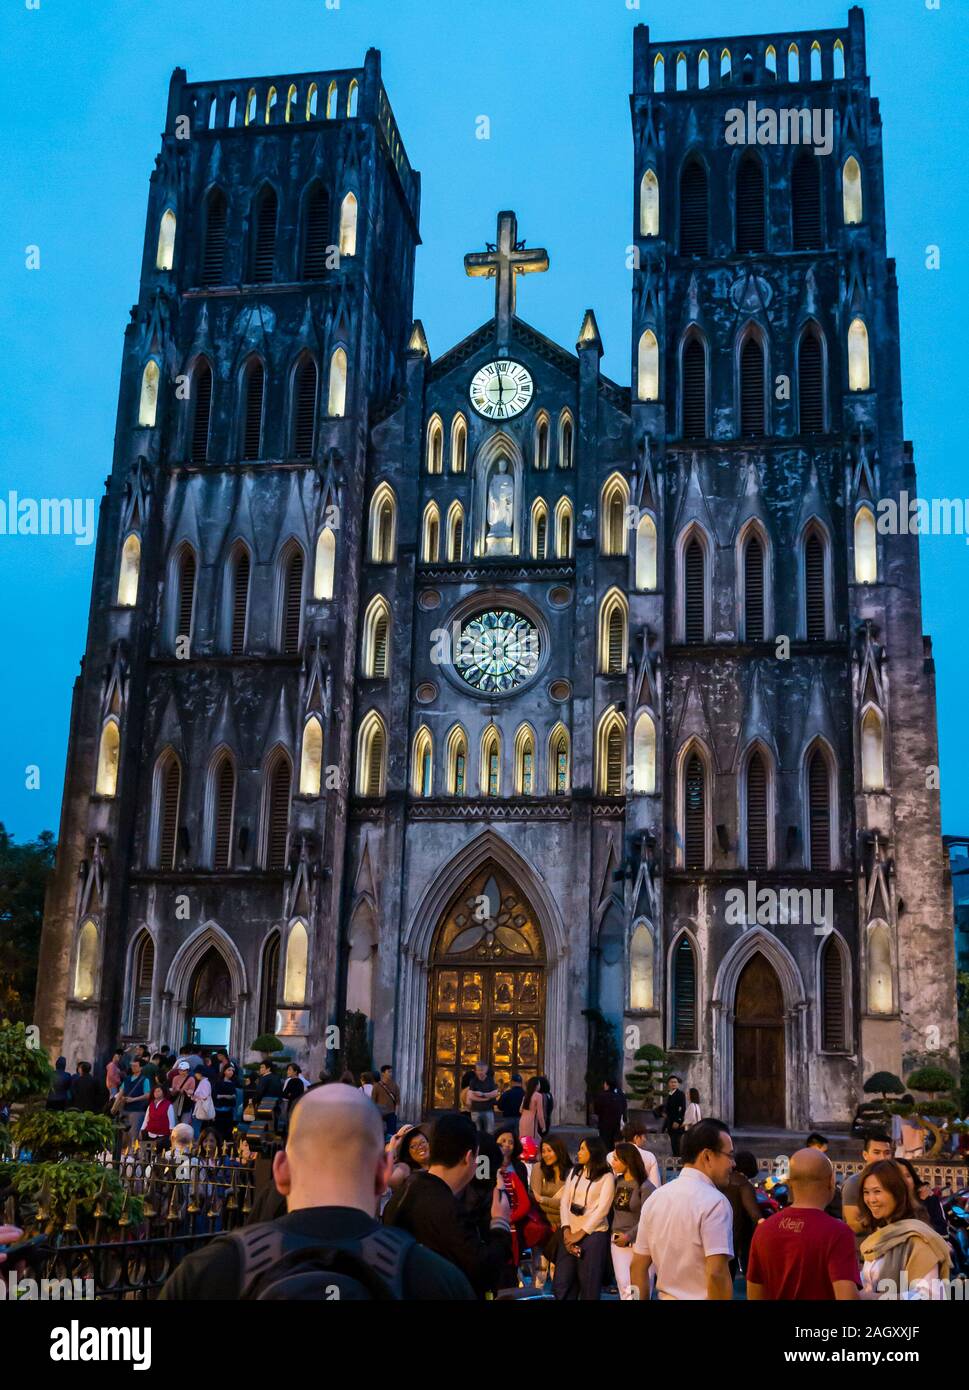 People at St Joseph's Cathedral lit up at dusk, Church Street, Hoan Kiem District, Hanoi, Vietnam, Southeast Asia Stock Photo